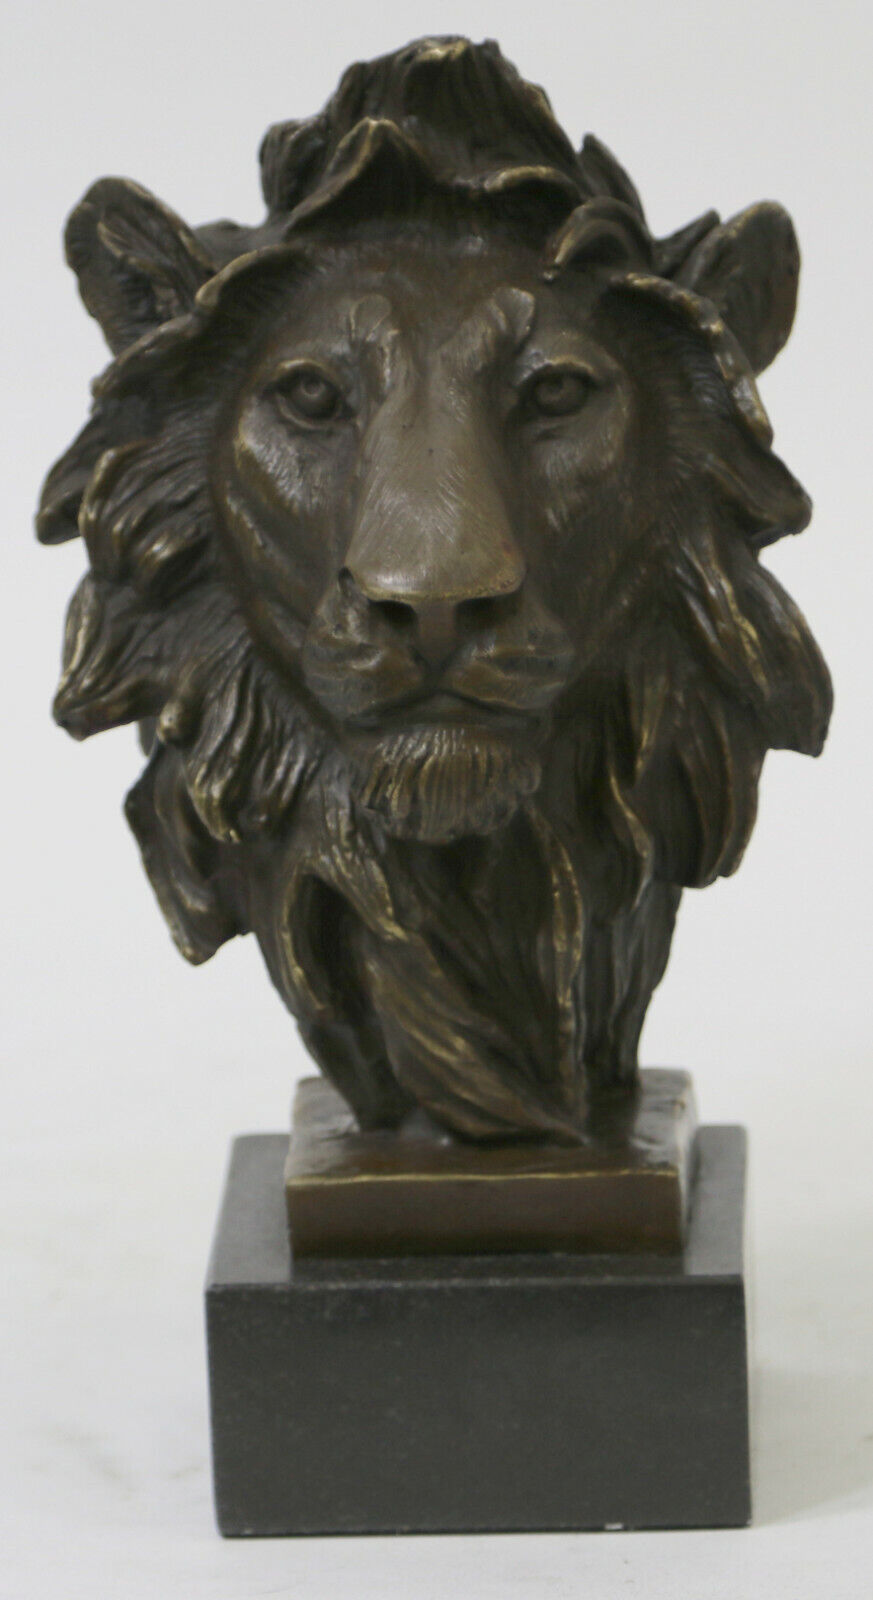 Signed Desk Top Lion Head Bust Bronze Sculpture Figurine Figure by Barye Figure